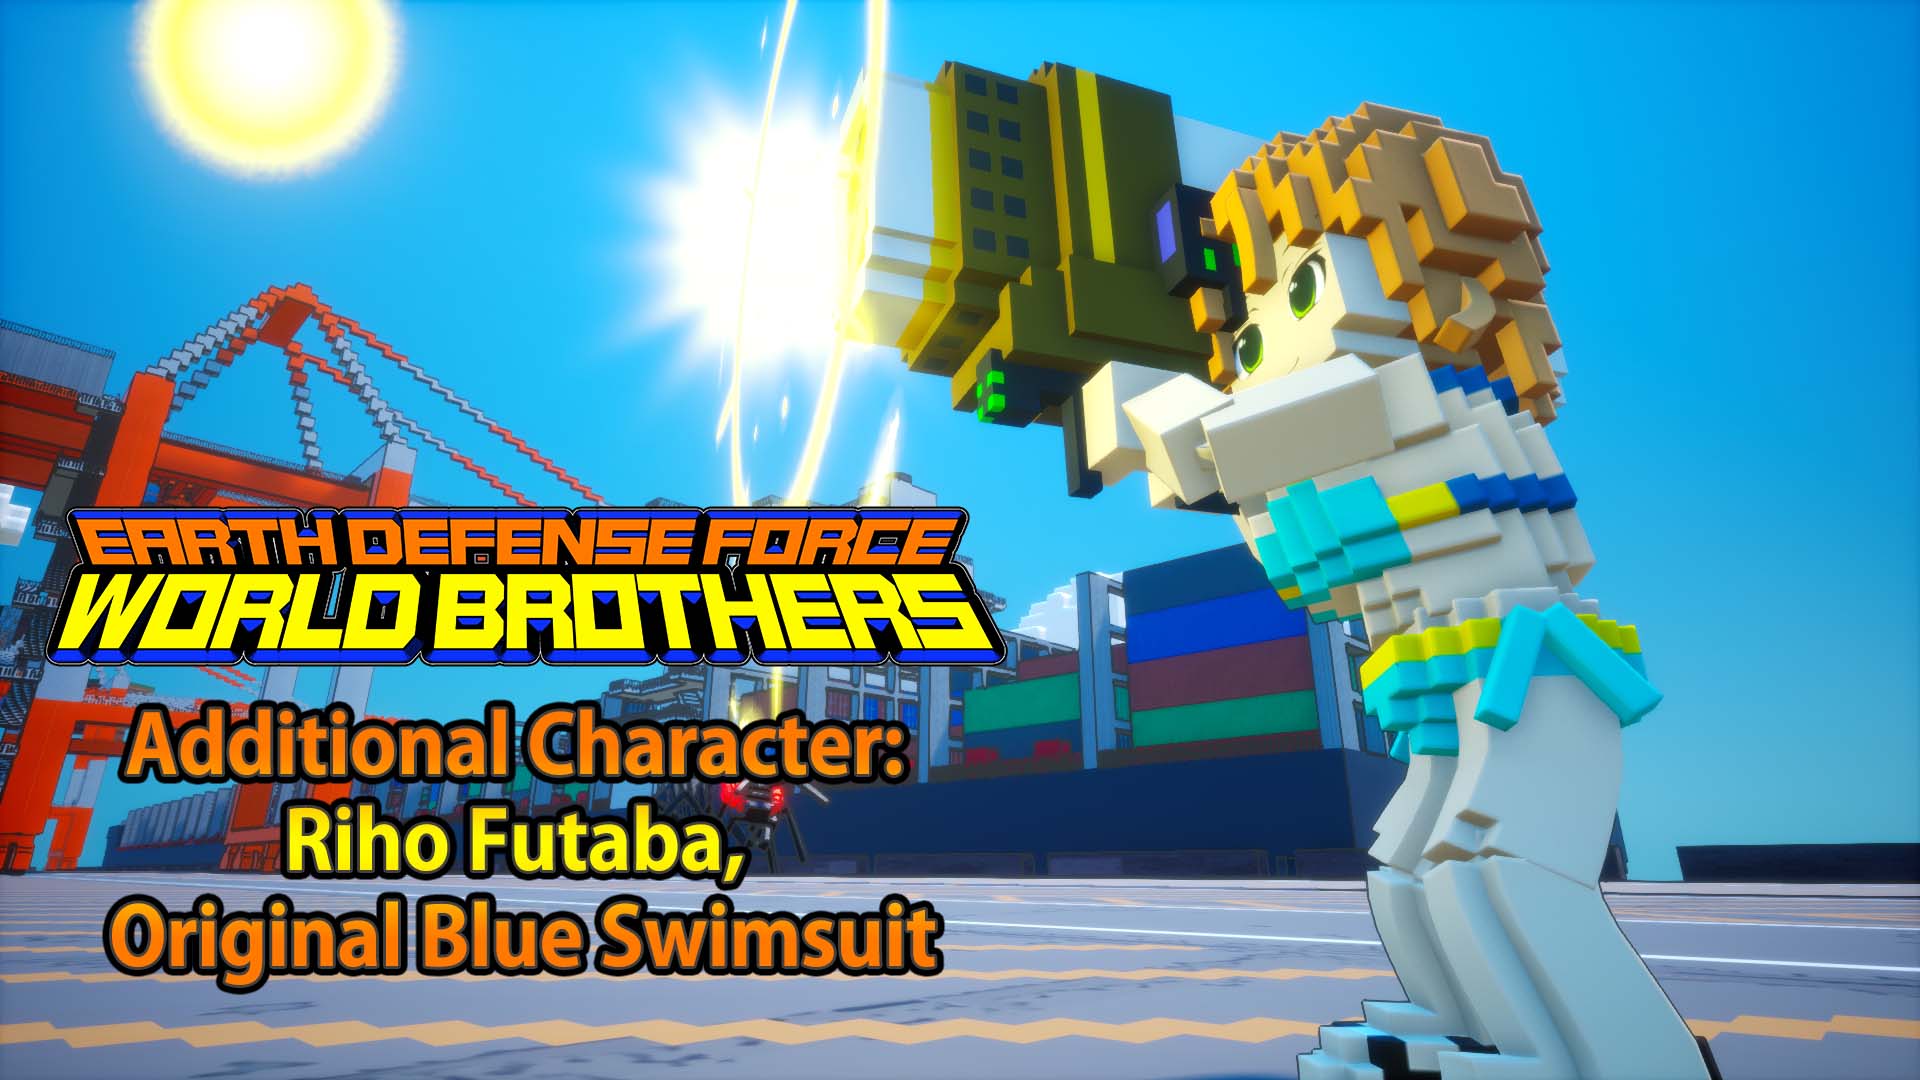 Additional Character: Riho Futaba, Original Blue Swimsuit